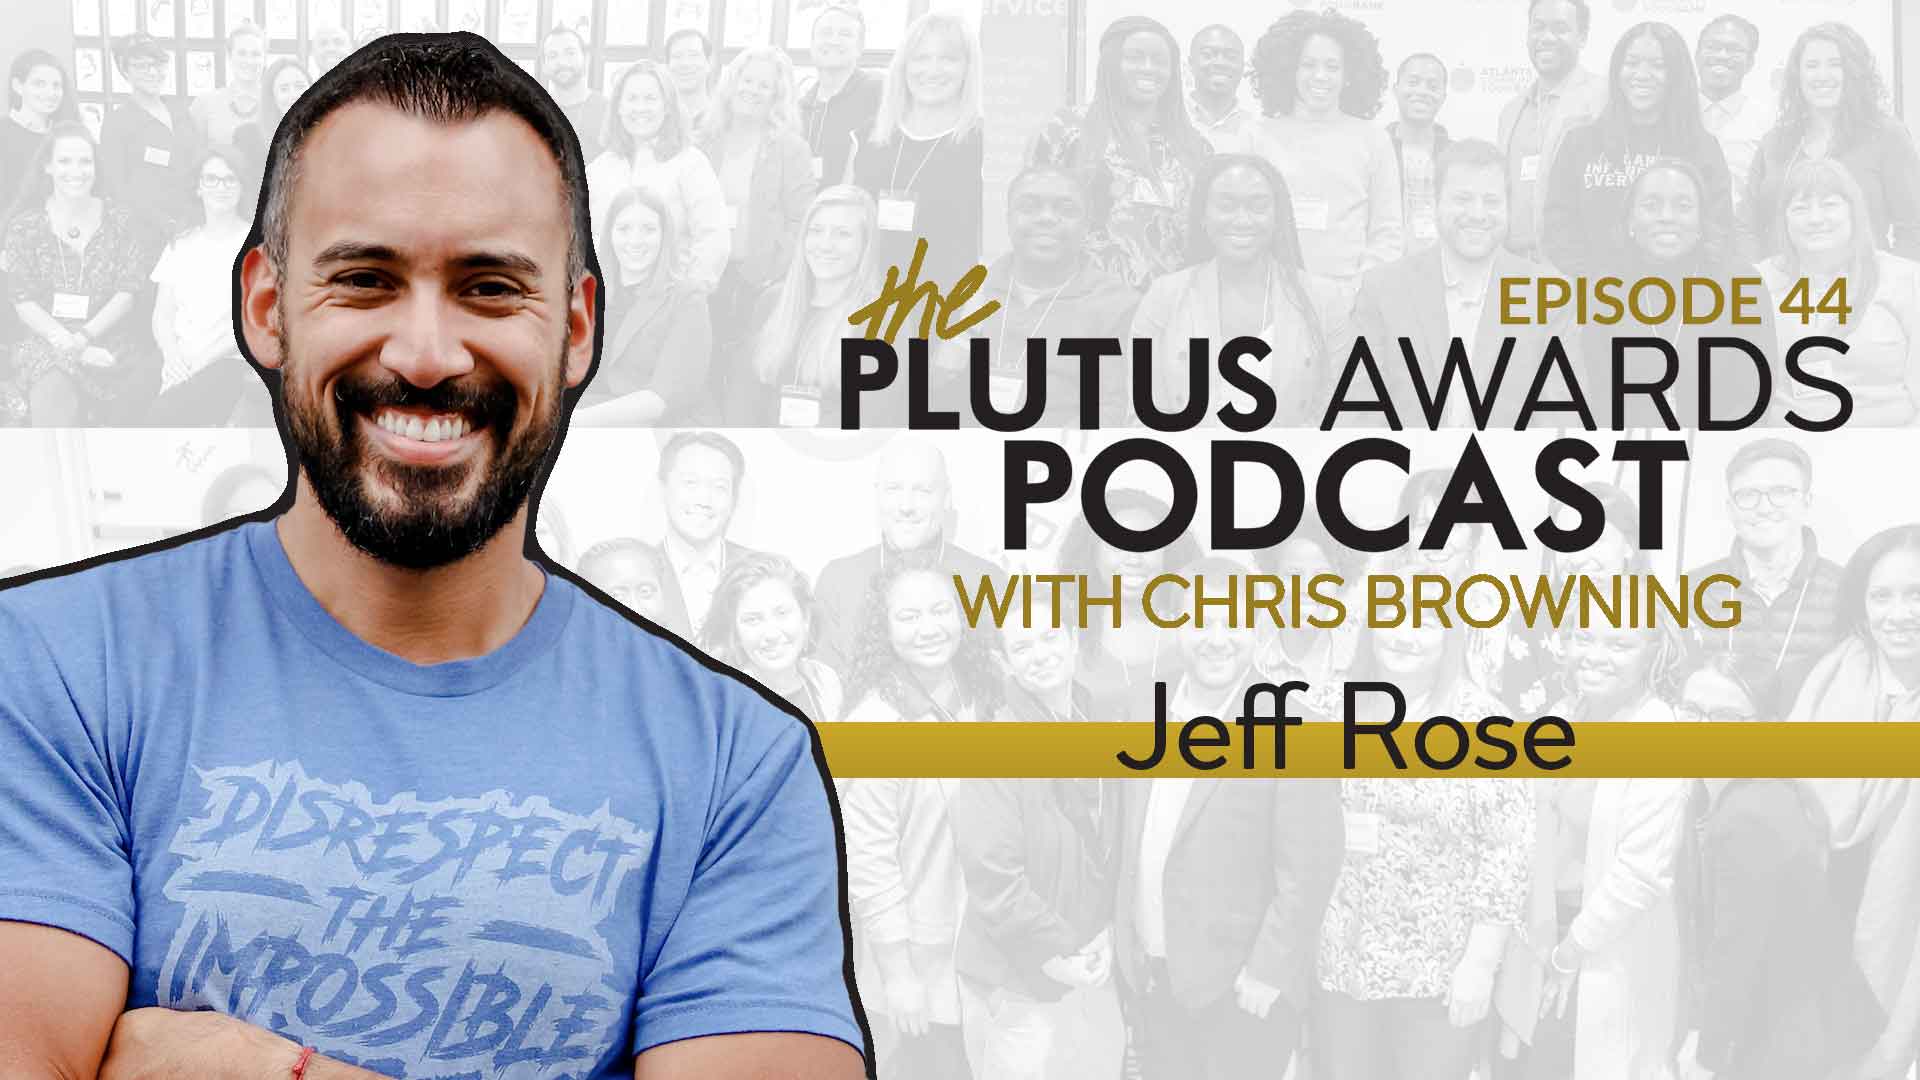 Plutus Awards Podcast Jeff Rose Featured Image